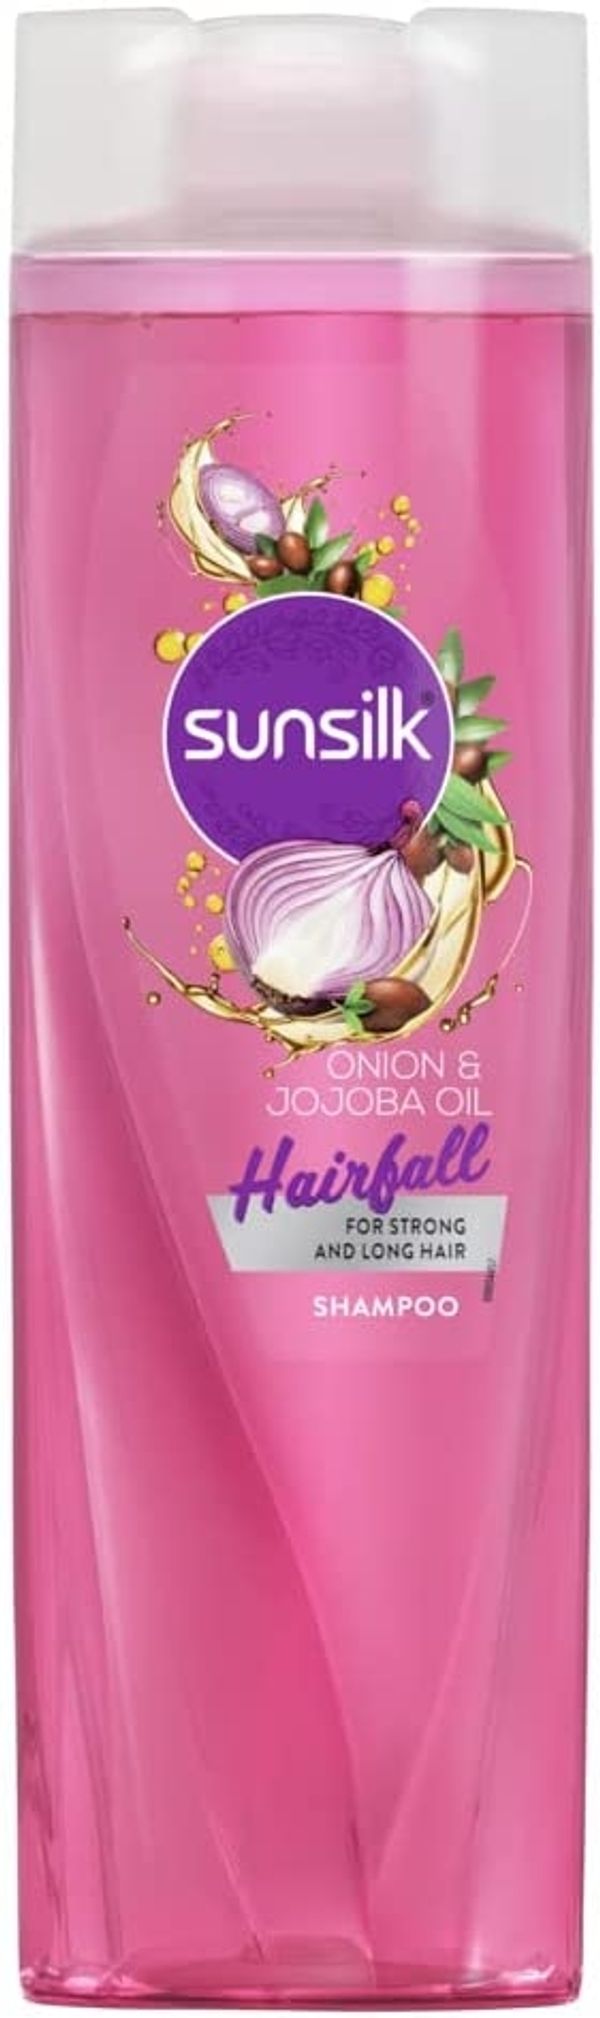 Sunsilk Hairfall Shampoo with Onion & Jojoba Oil,340ml Sunsilk Hairfall Shampoo with Onion & Jojoba Oil 340ml